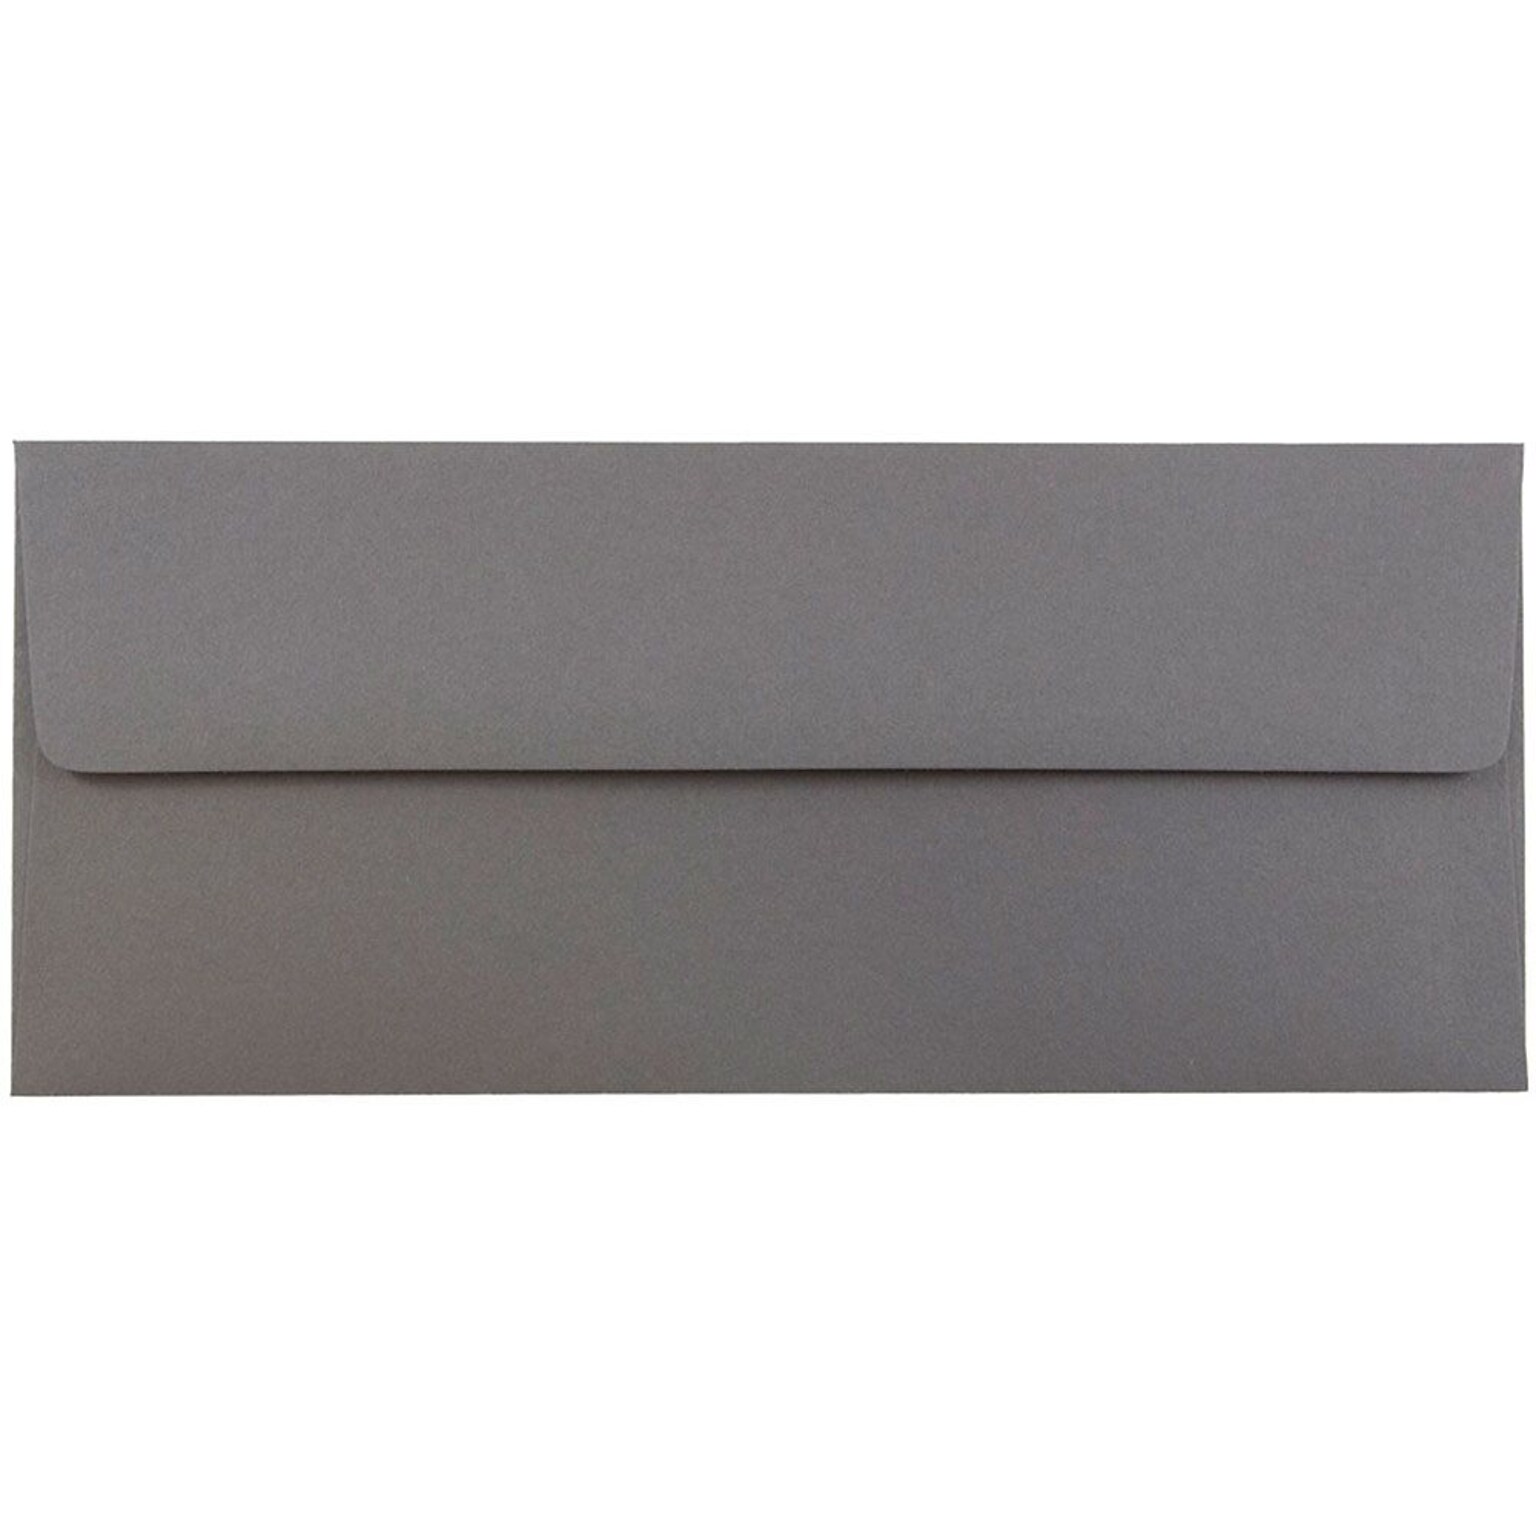 JAM Paper #10 Business Envelope, 4 1/8 x 9 1/2, Dark Grey, 25/Pack (36396438)